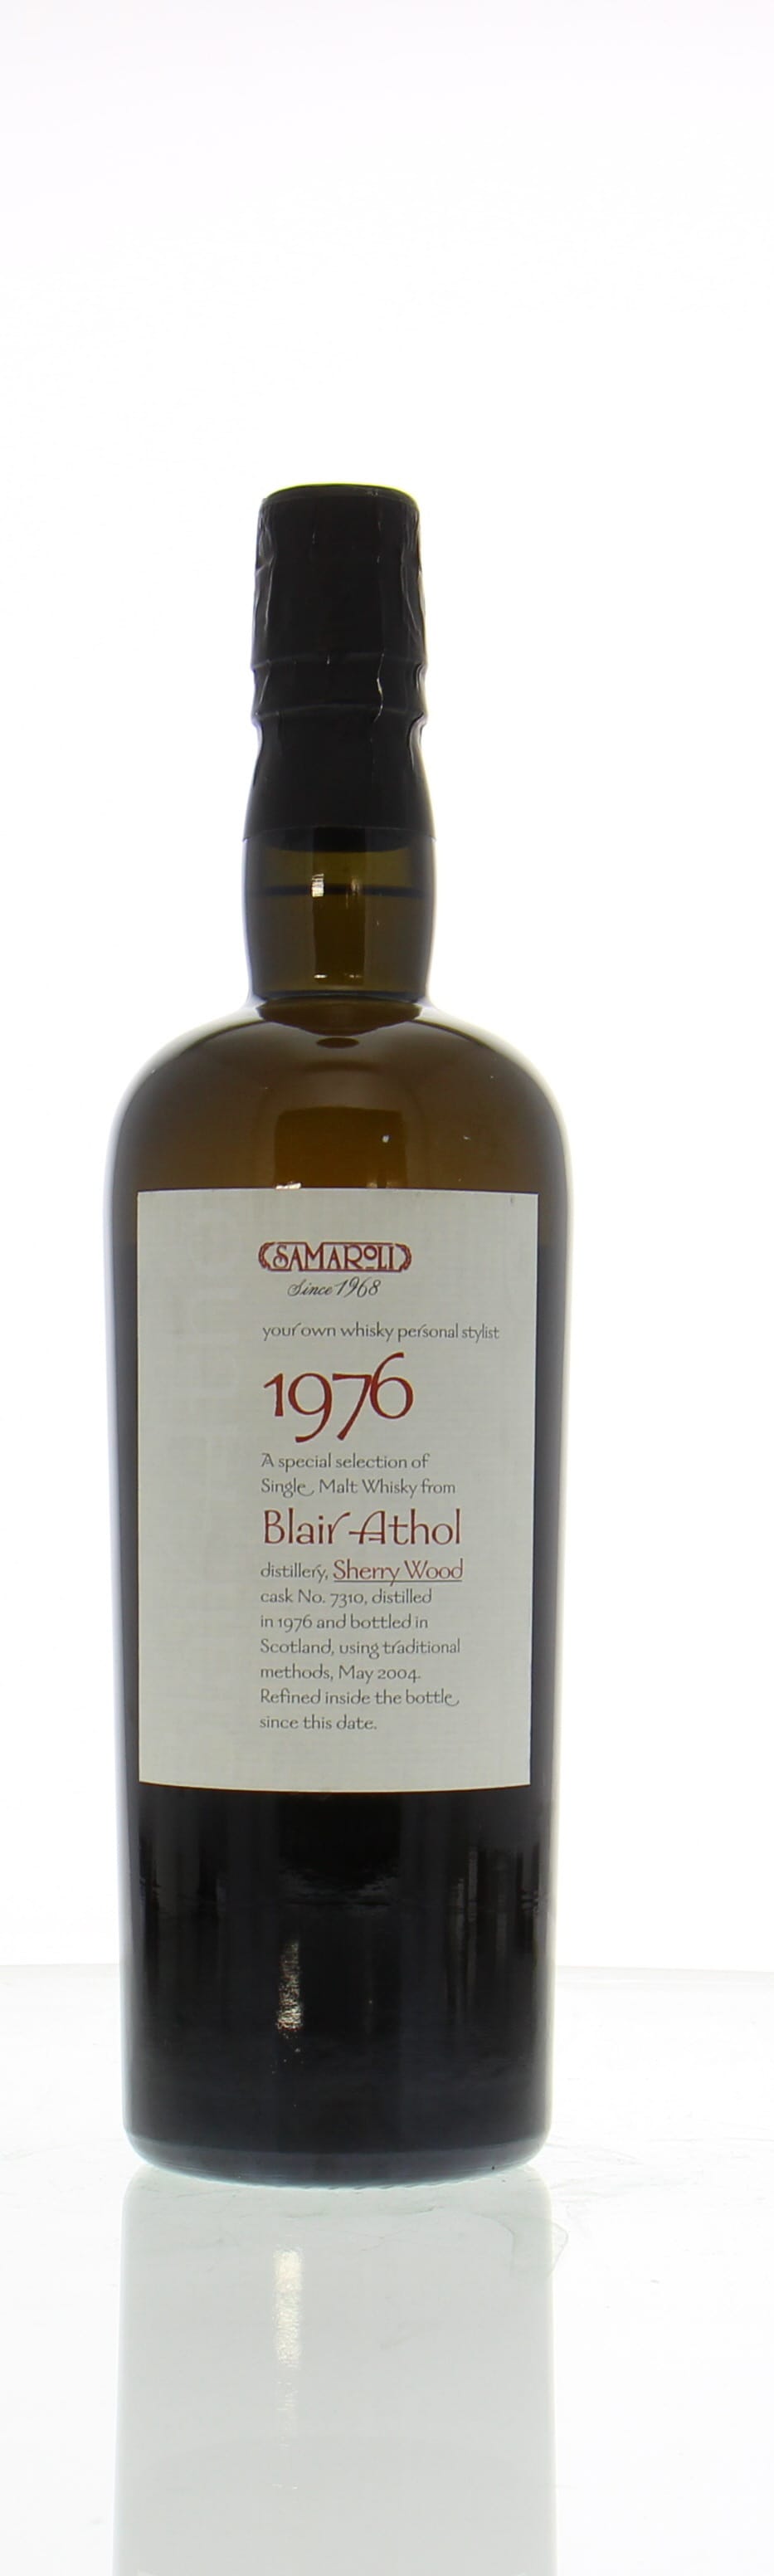 Blair Athol - 1976 Samaroli 35th Anniversary Cask: 7310 45% 1976